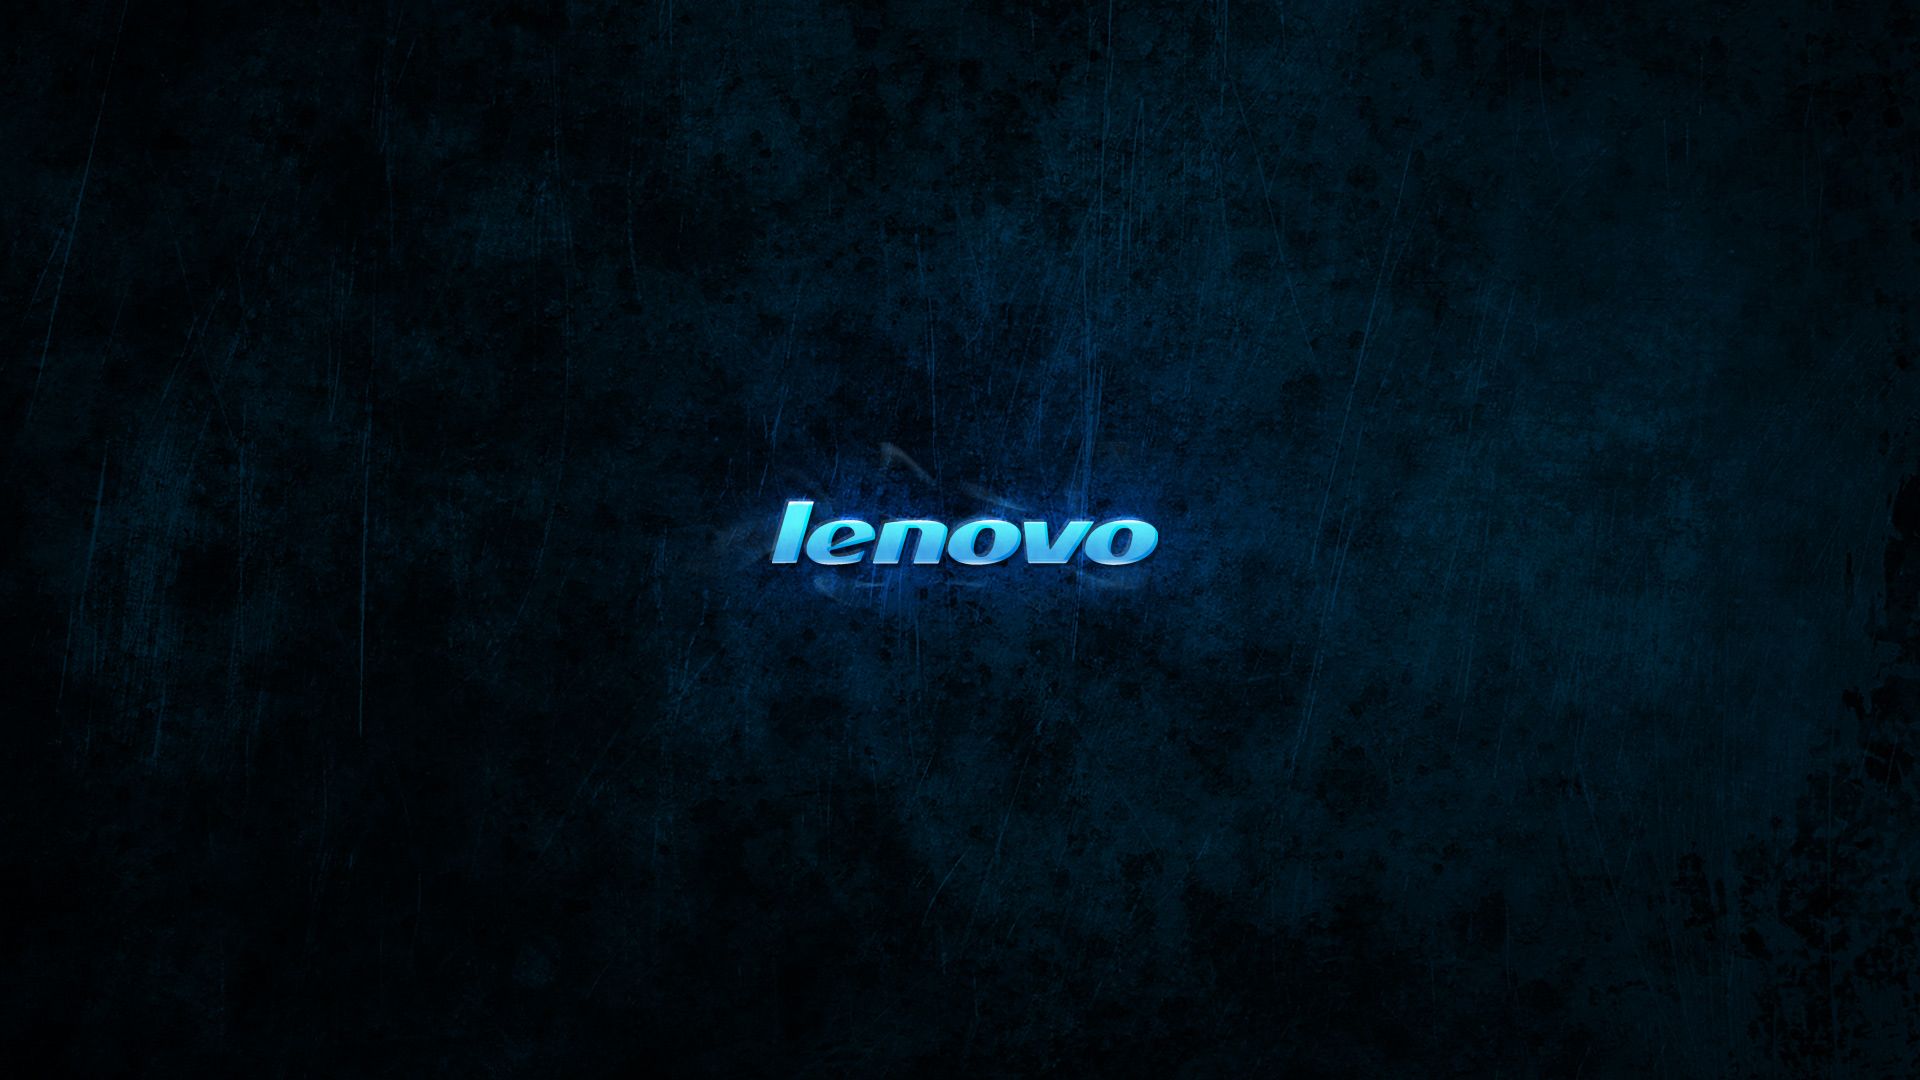 Lenovo Windows 8 Backgrounds